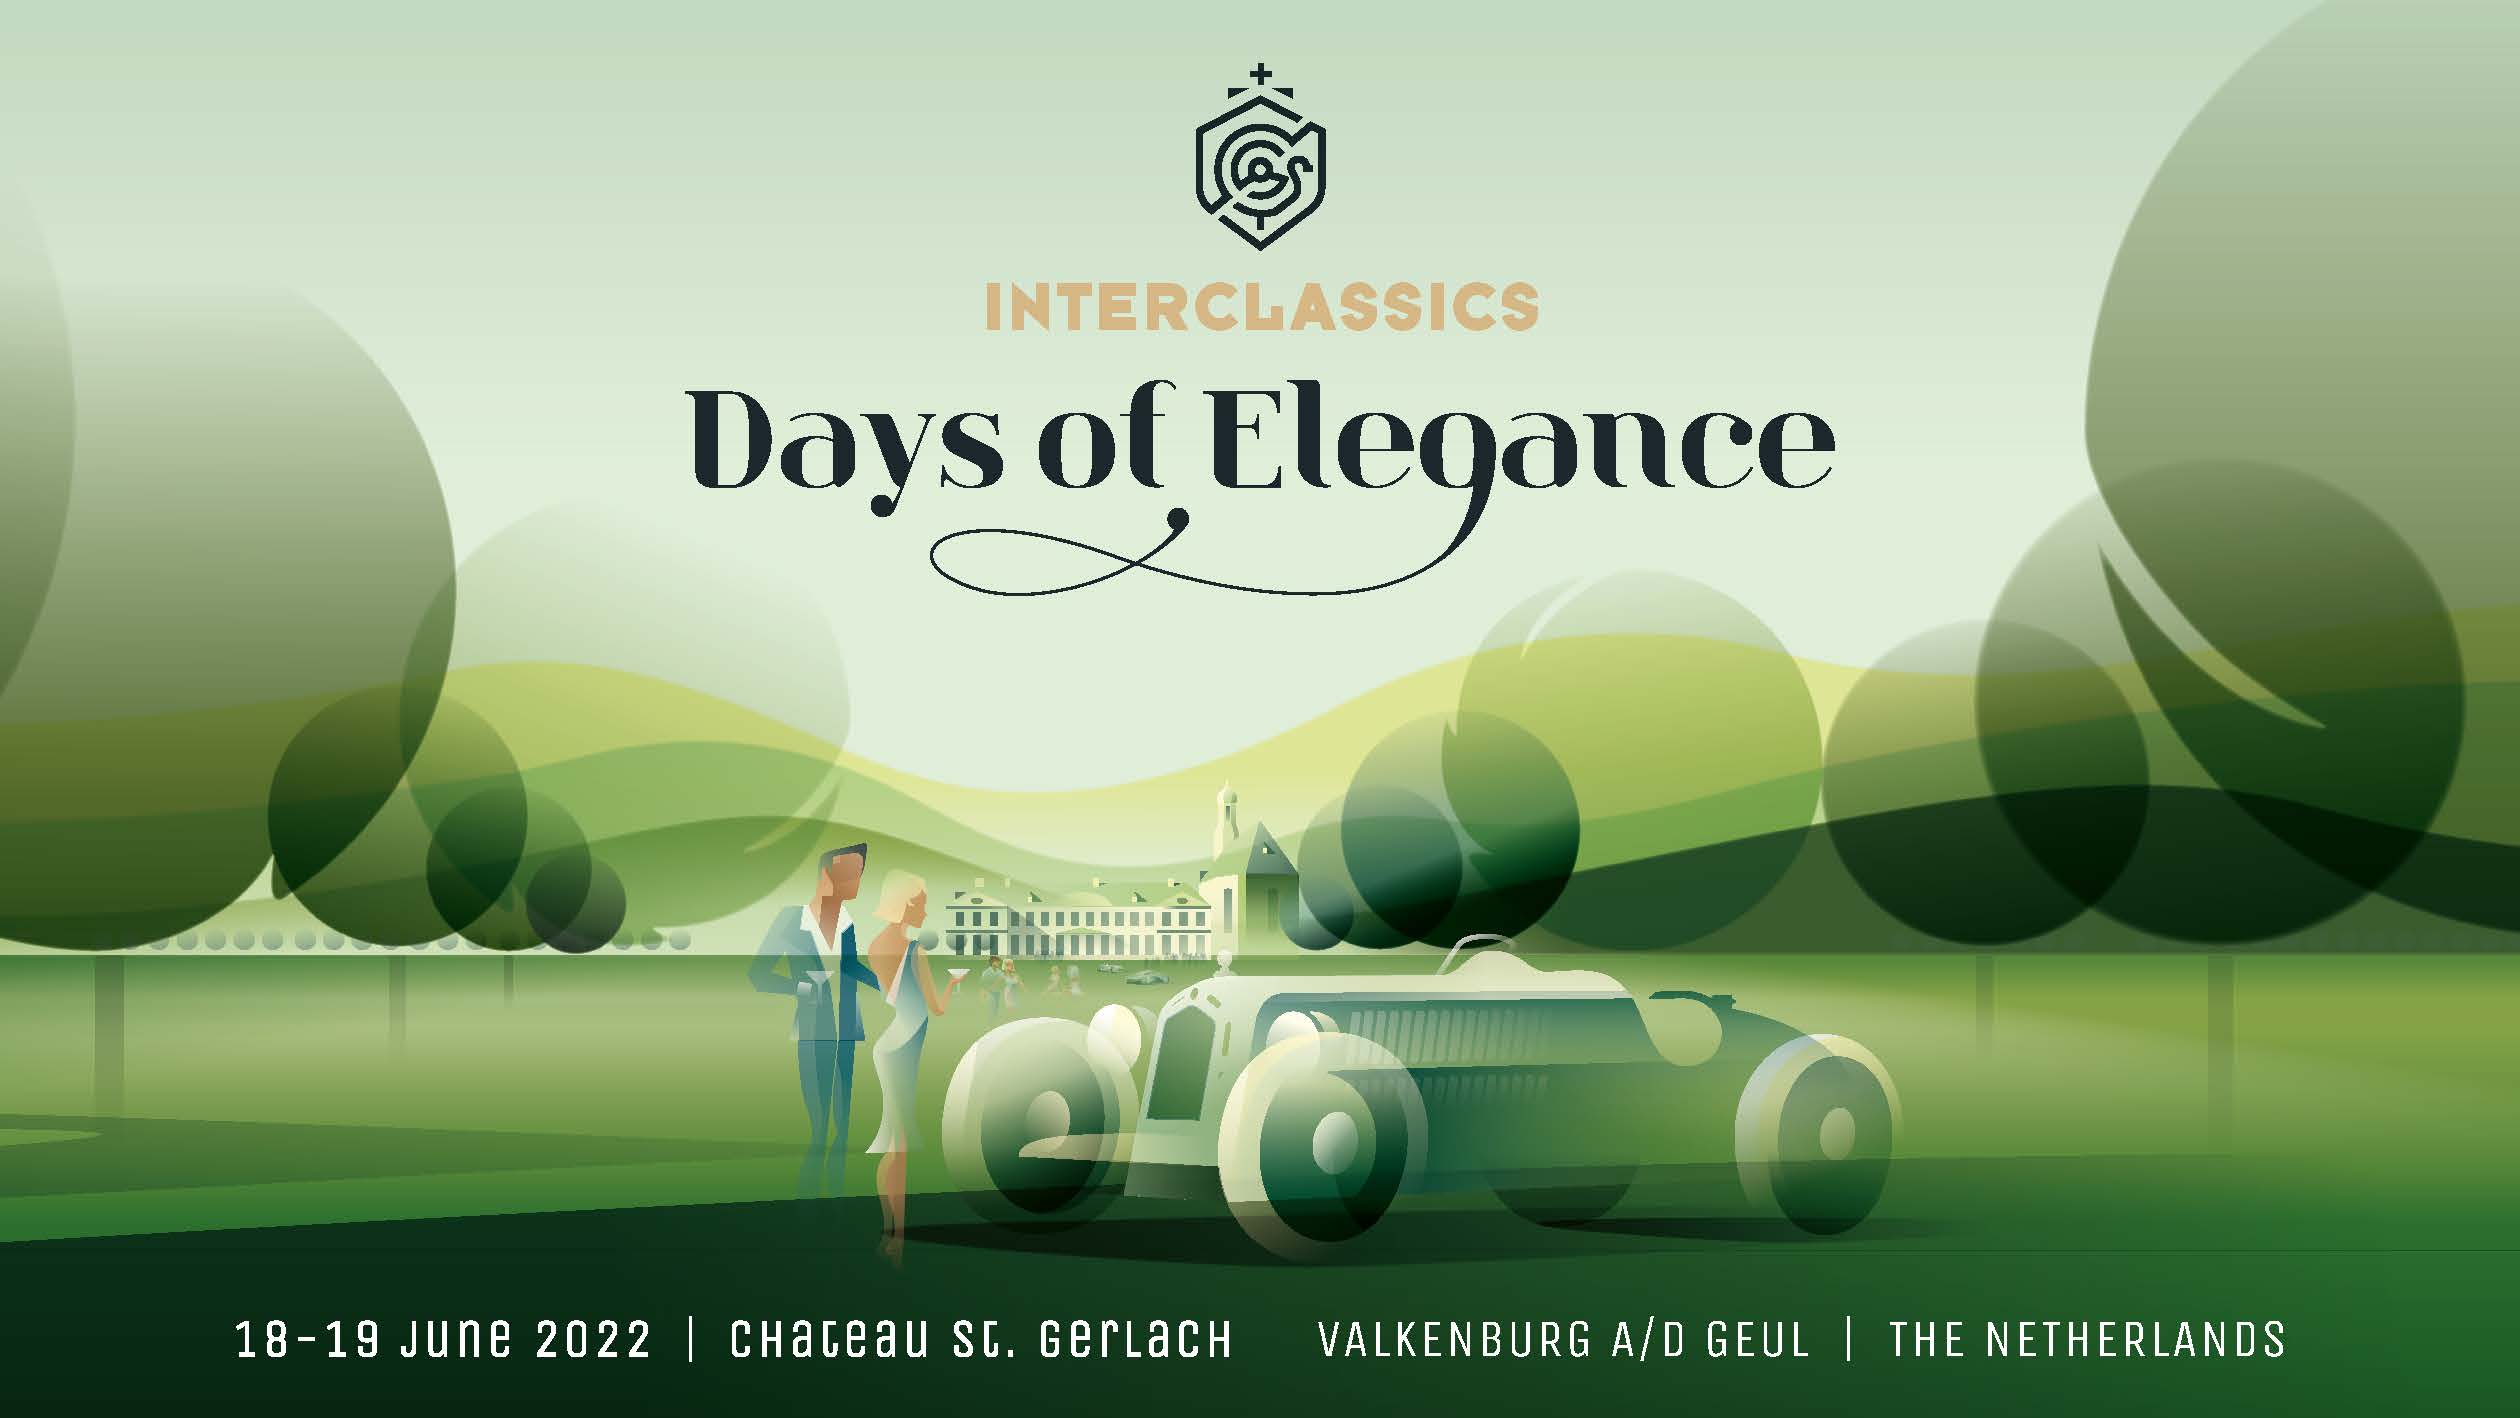 InterClassics kündigt neues hochklassiges Event für Juni 2022 an 